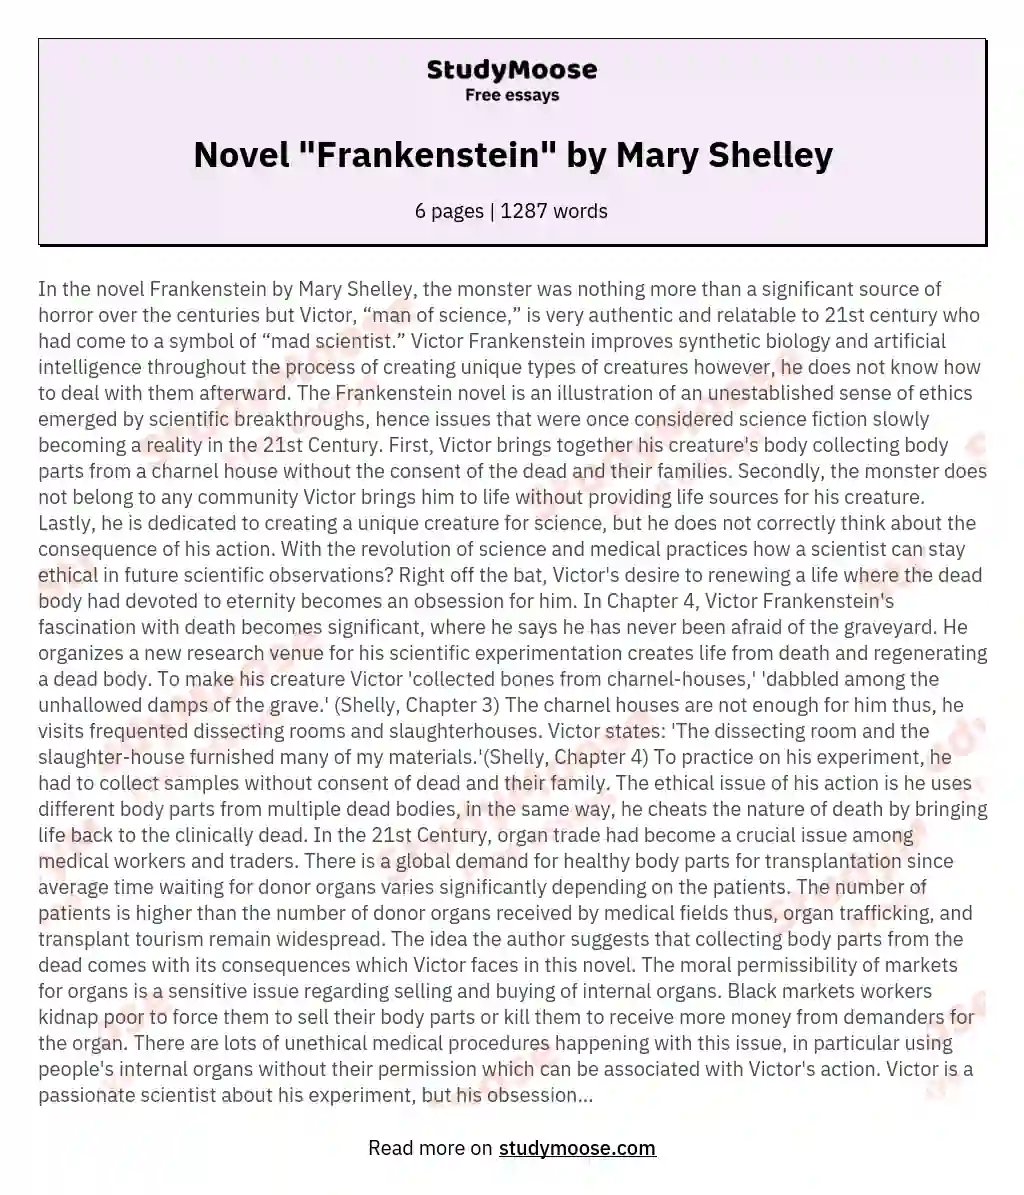 Novel "Frankenstein" by Mary Shelley essay